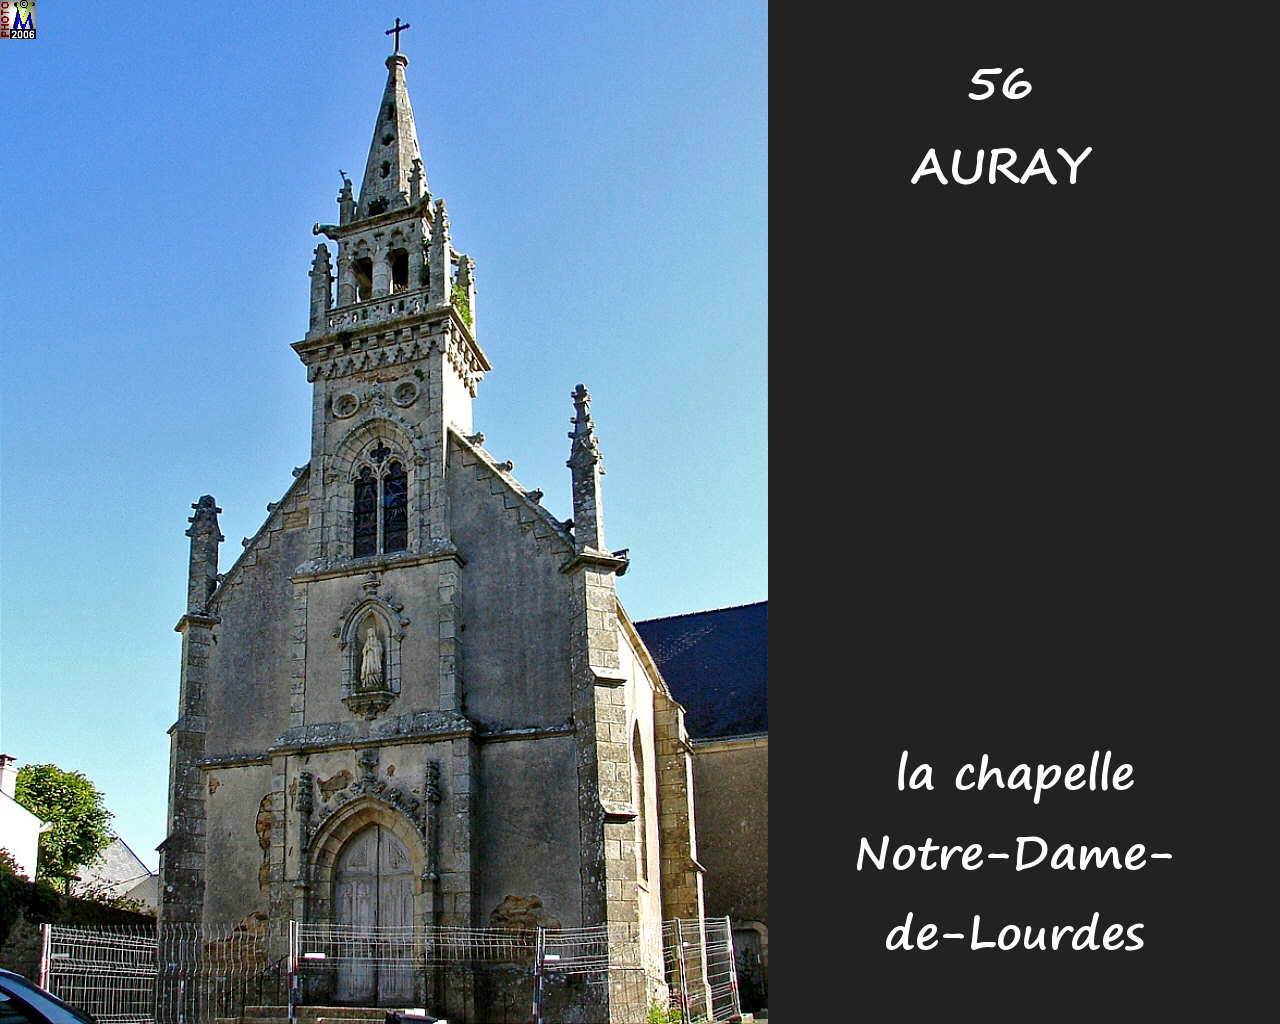 56AURAY_chapelle_ND_Lourdes_100.jpg